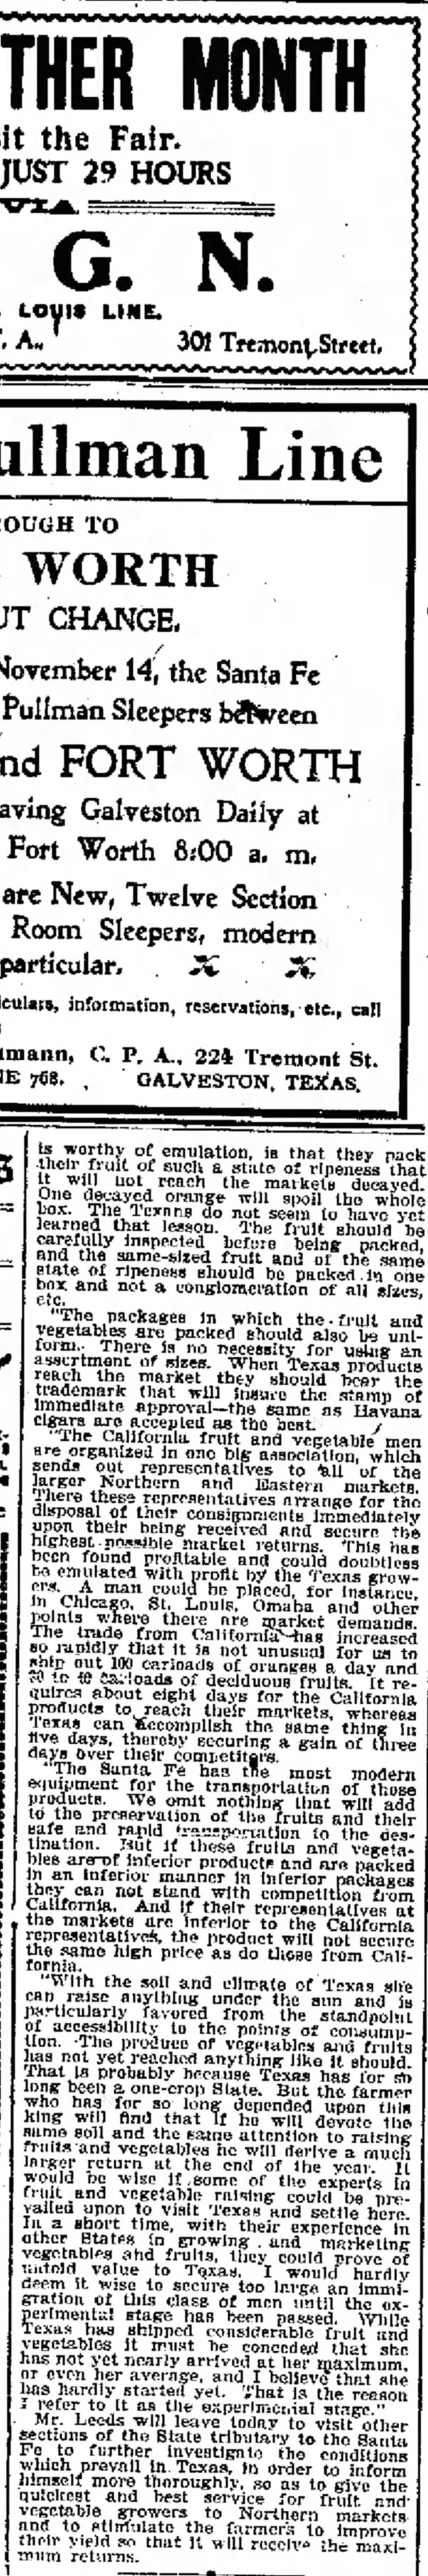 The Galveston Daily News (Galveston, Texas)
15 Nov 1904, Tue
Page 12